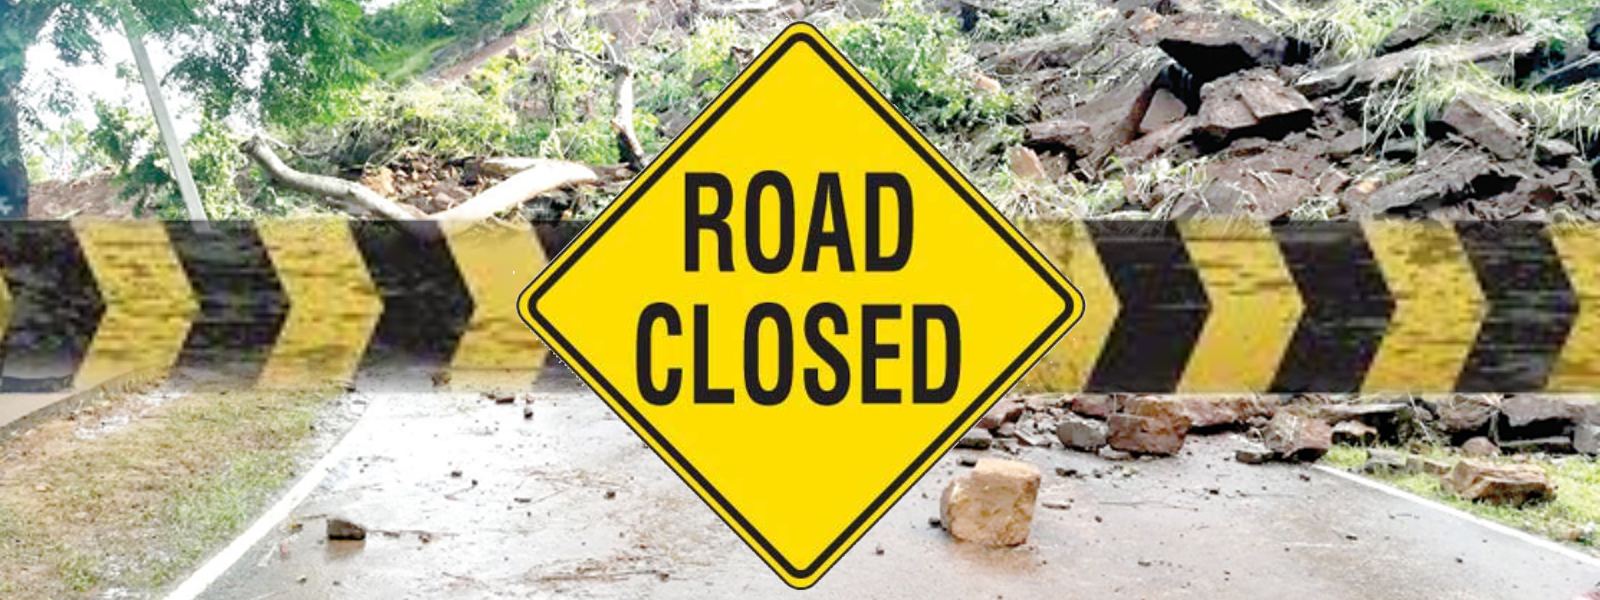 Colombo – Kandy road to remain closed from Lower Kadugannawa